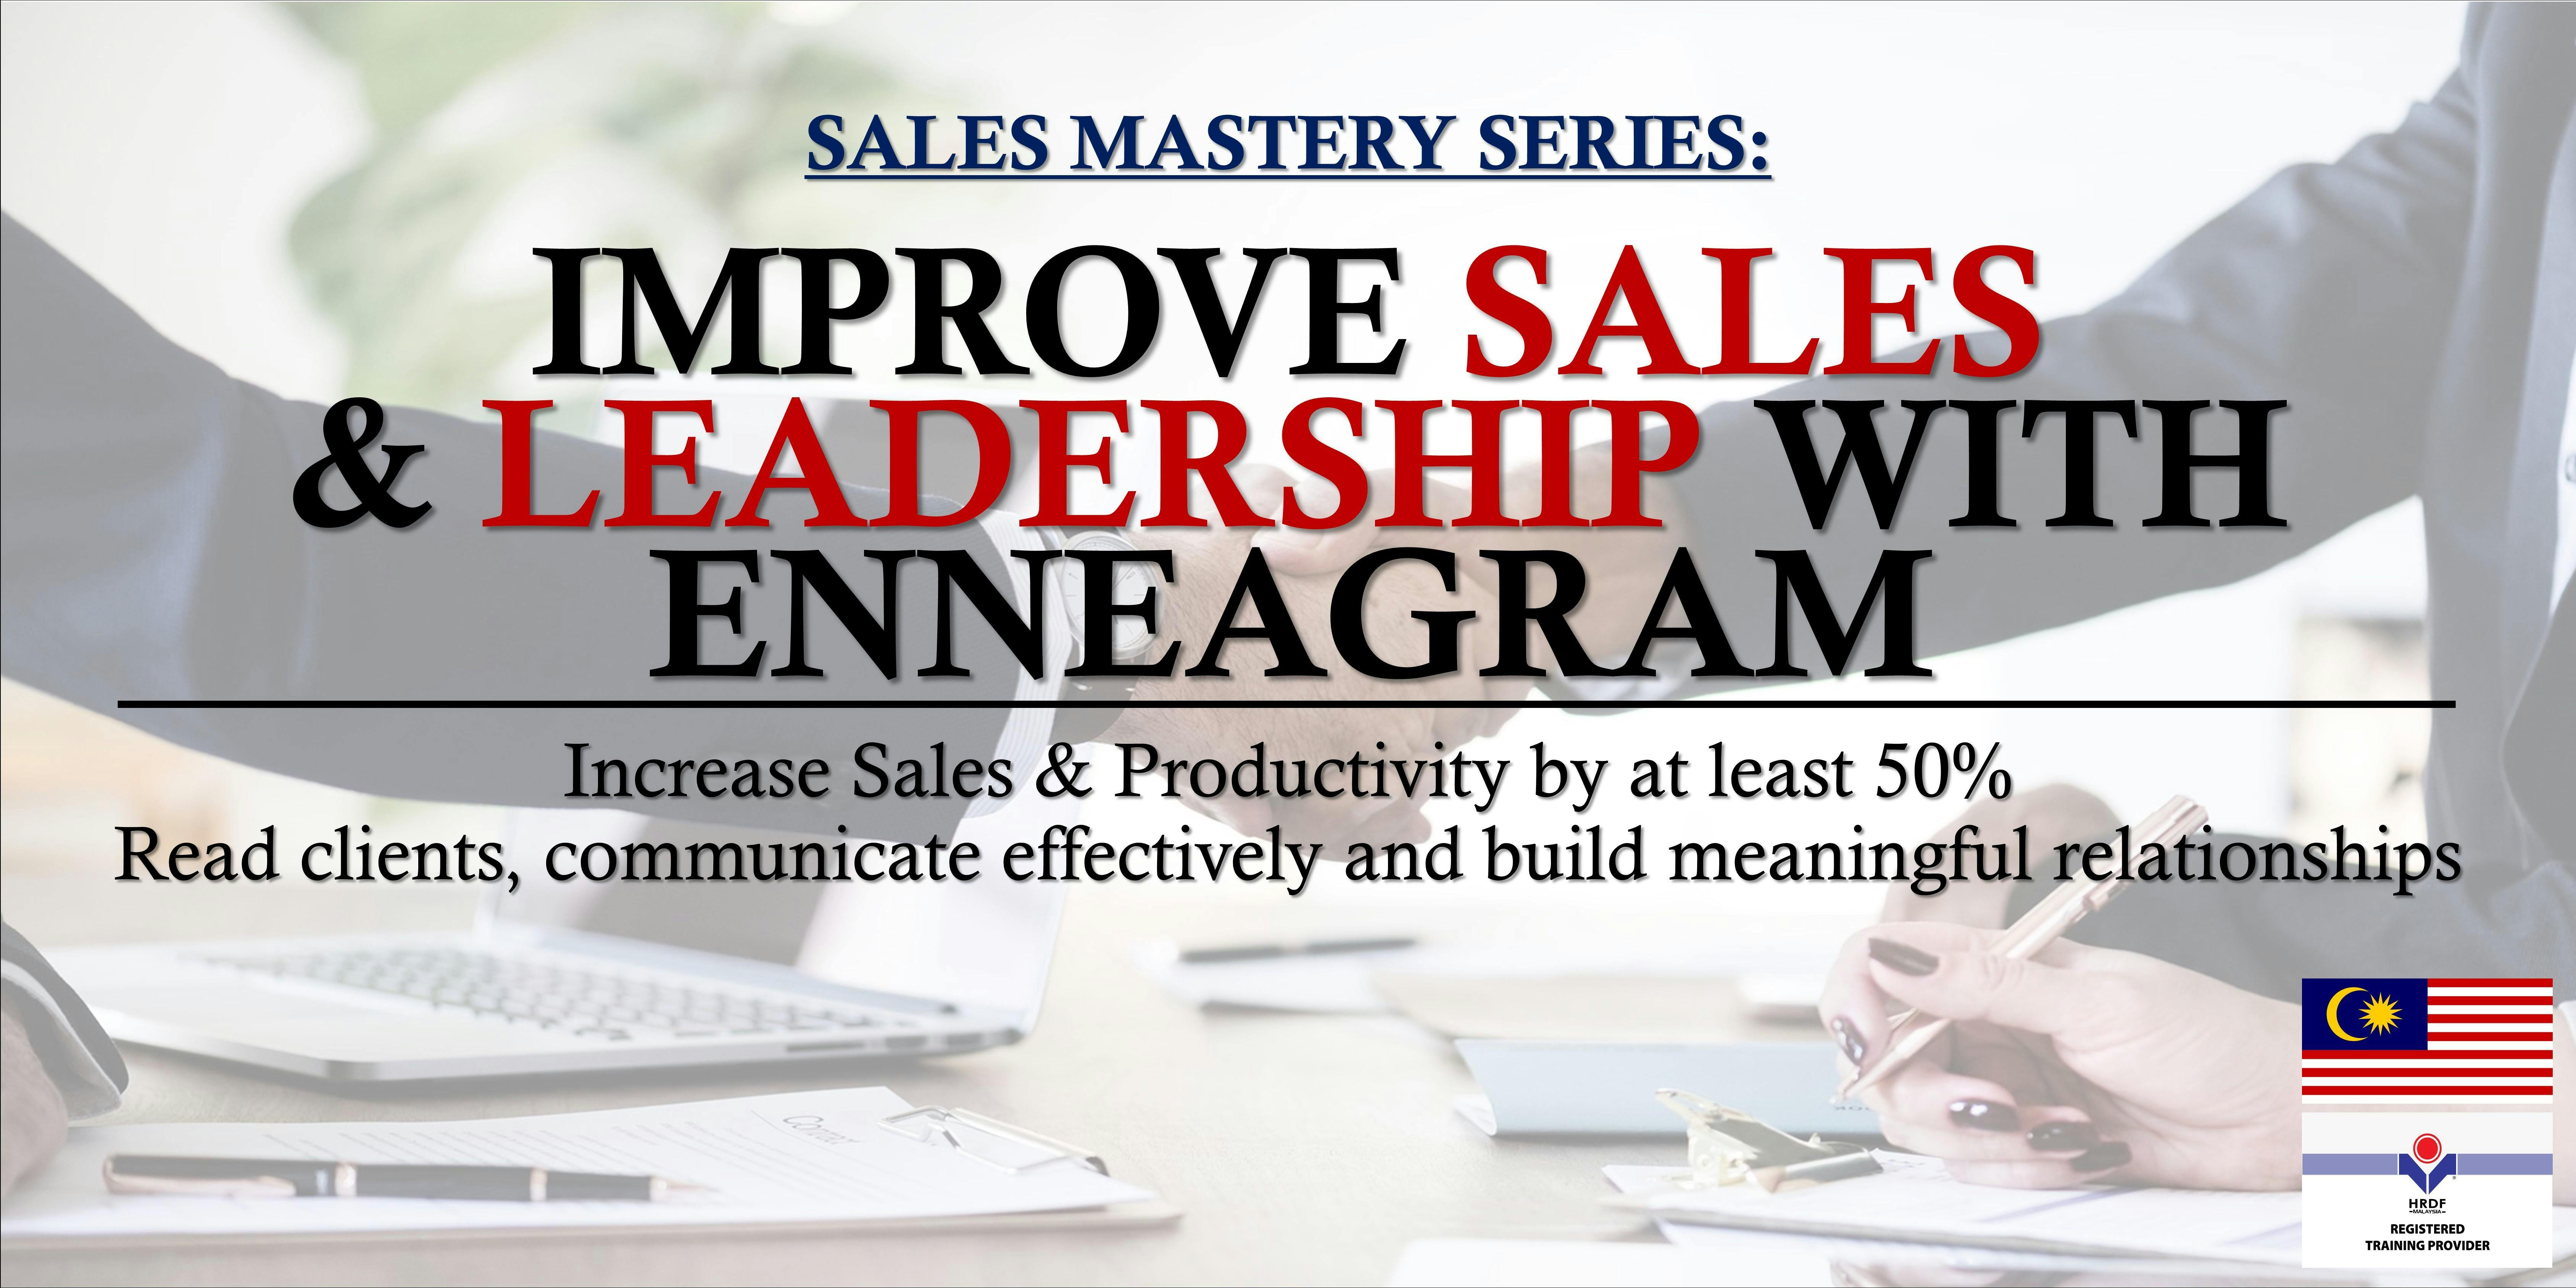 Sales Mastery Series: Improve Sales & Leadership with Enneagram